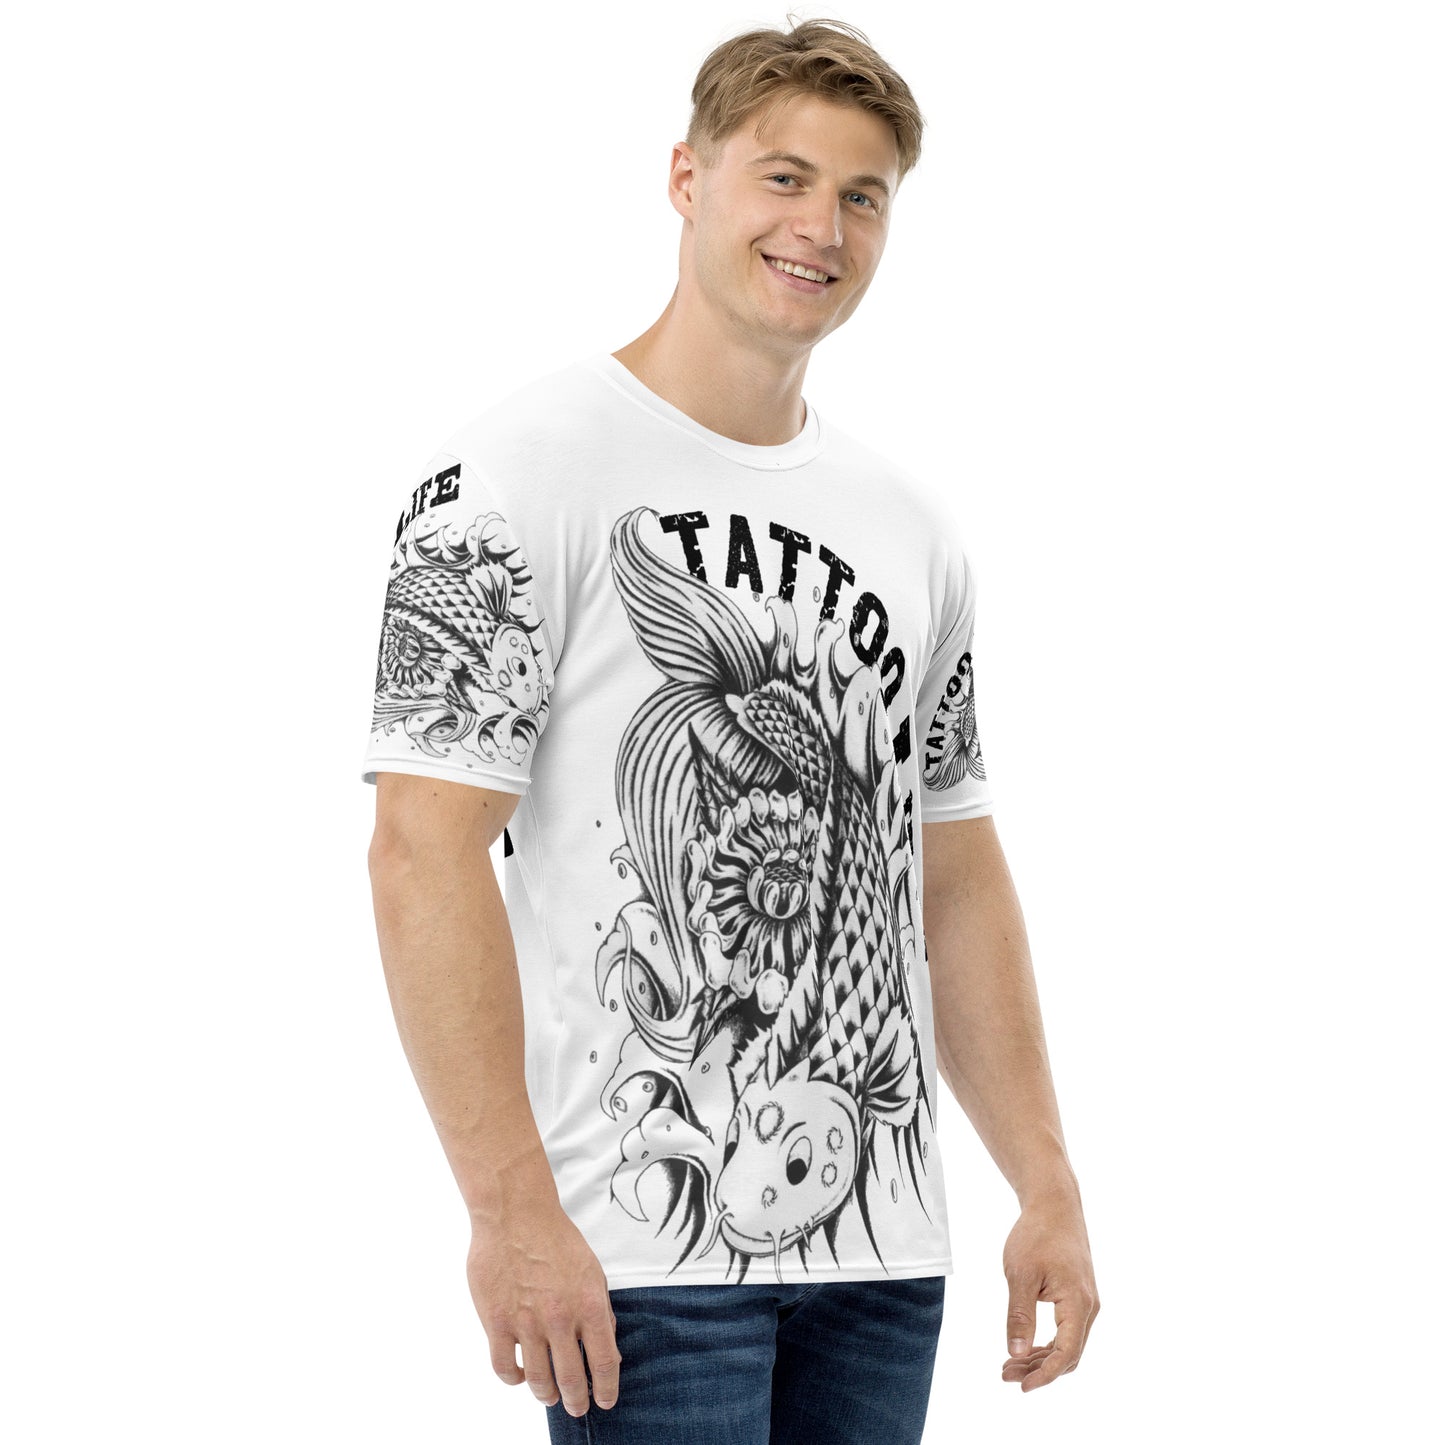 TATTOO LIFE - Koi Fish (All Over Printed Shirt)